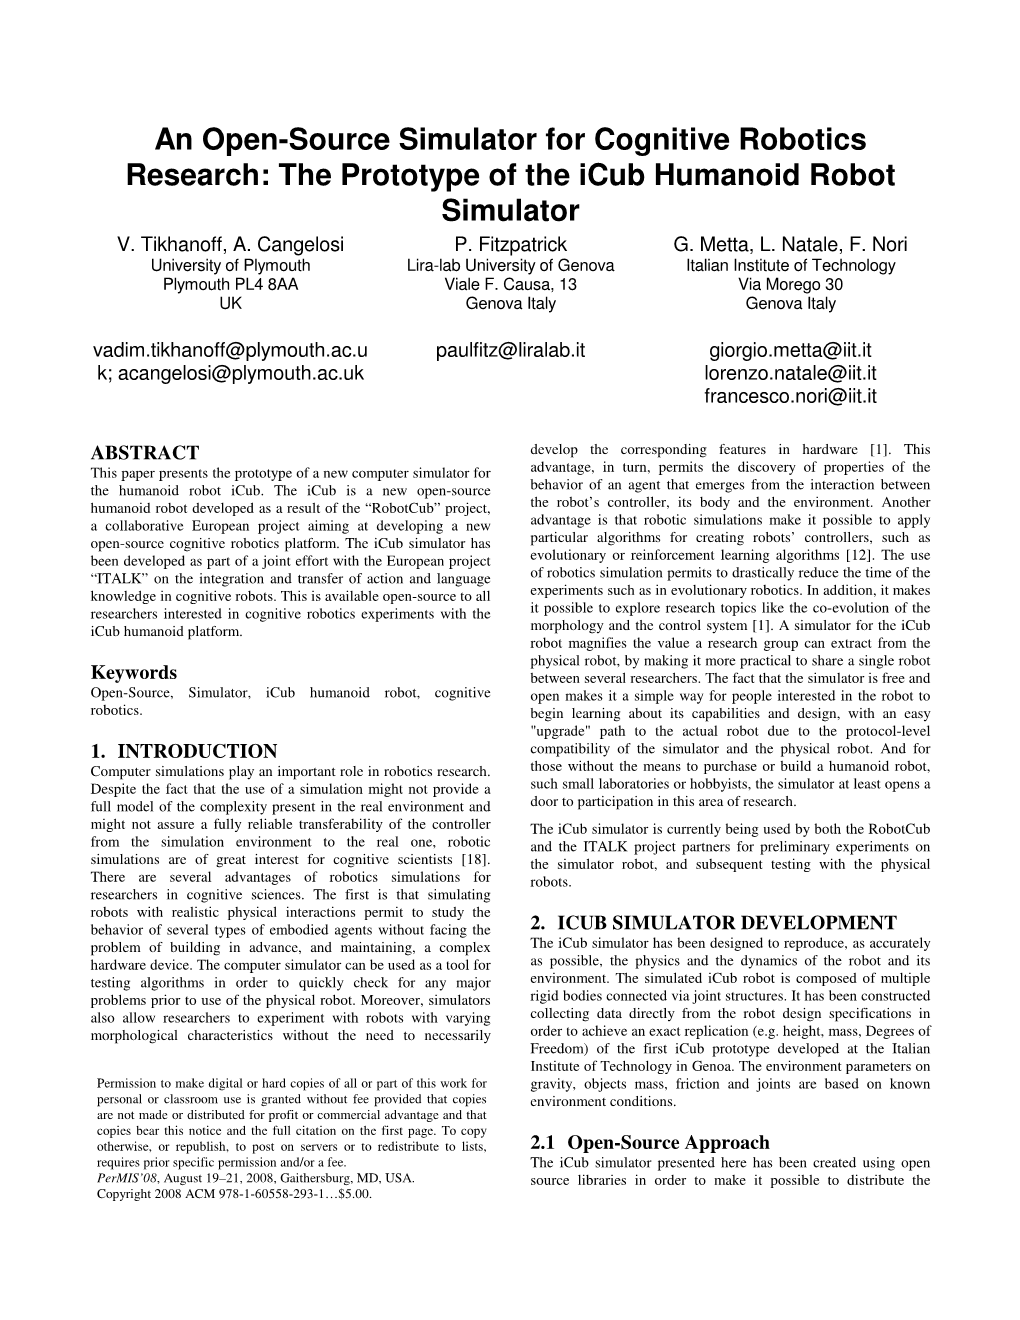 The Prototype of the Icub Humanoid Robot Simulator V